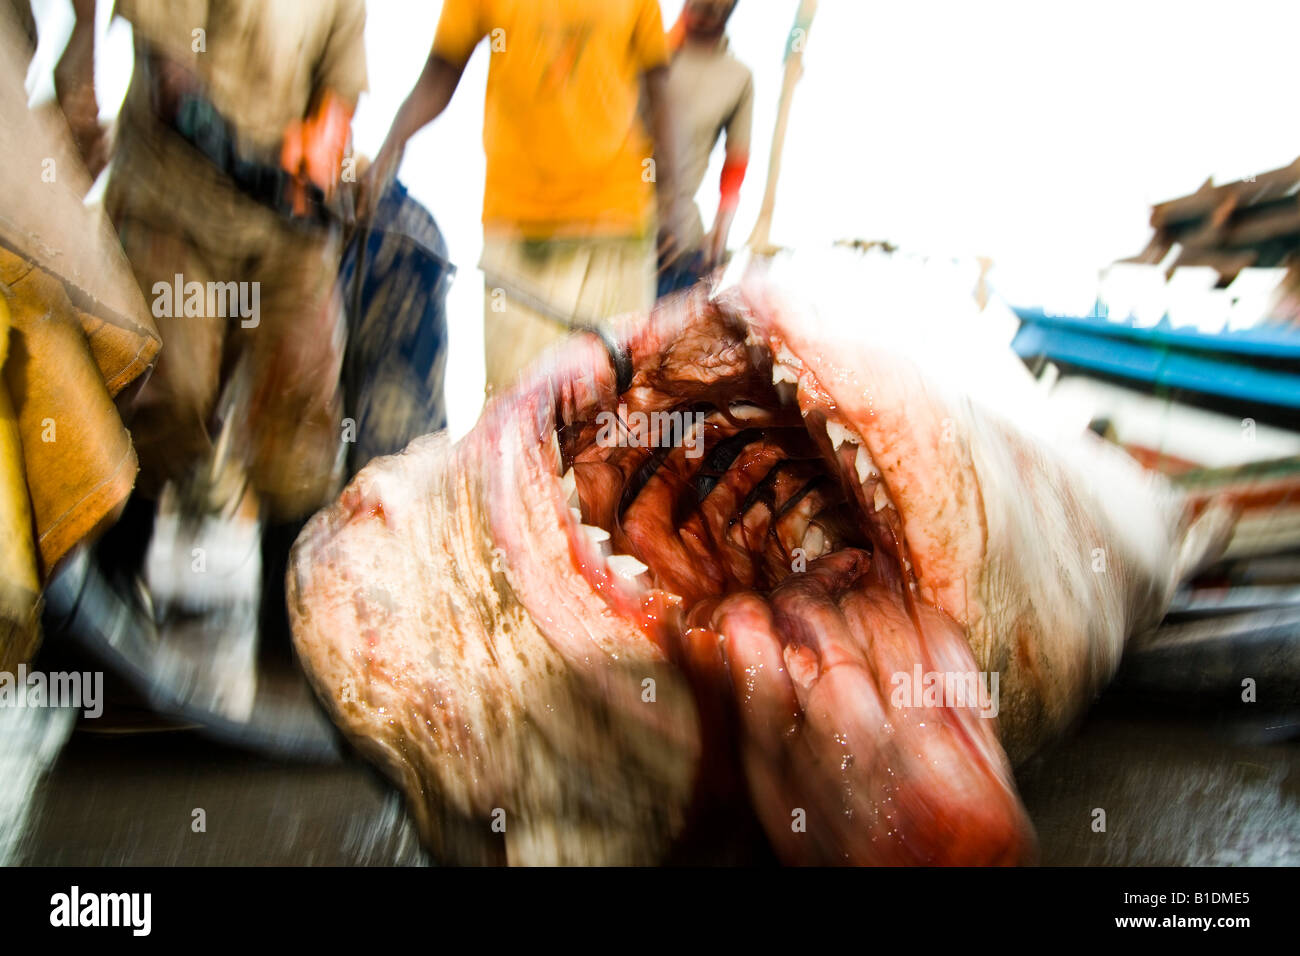 Shark dragged on the ground at fish market, Yemen Stock Photo